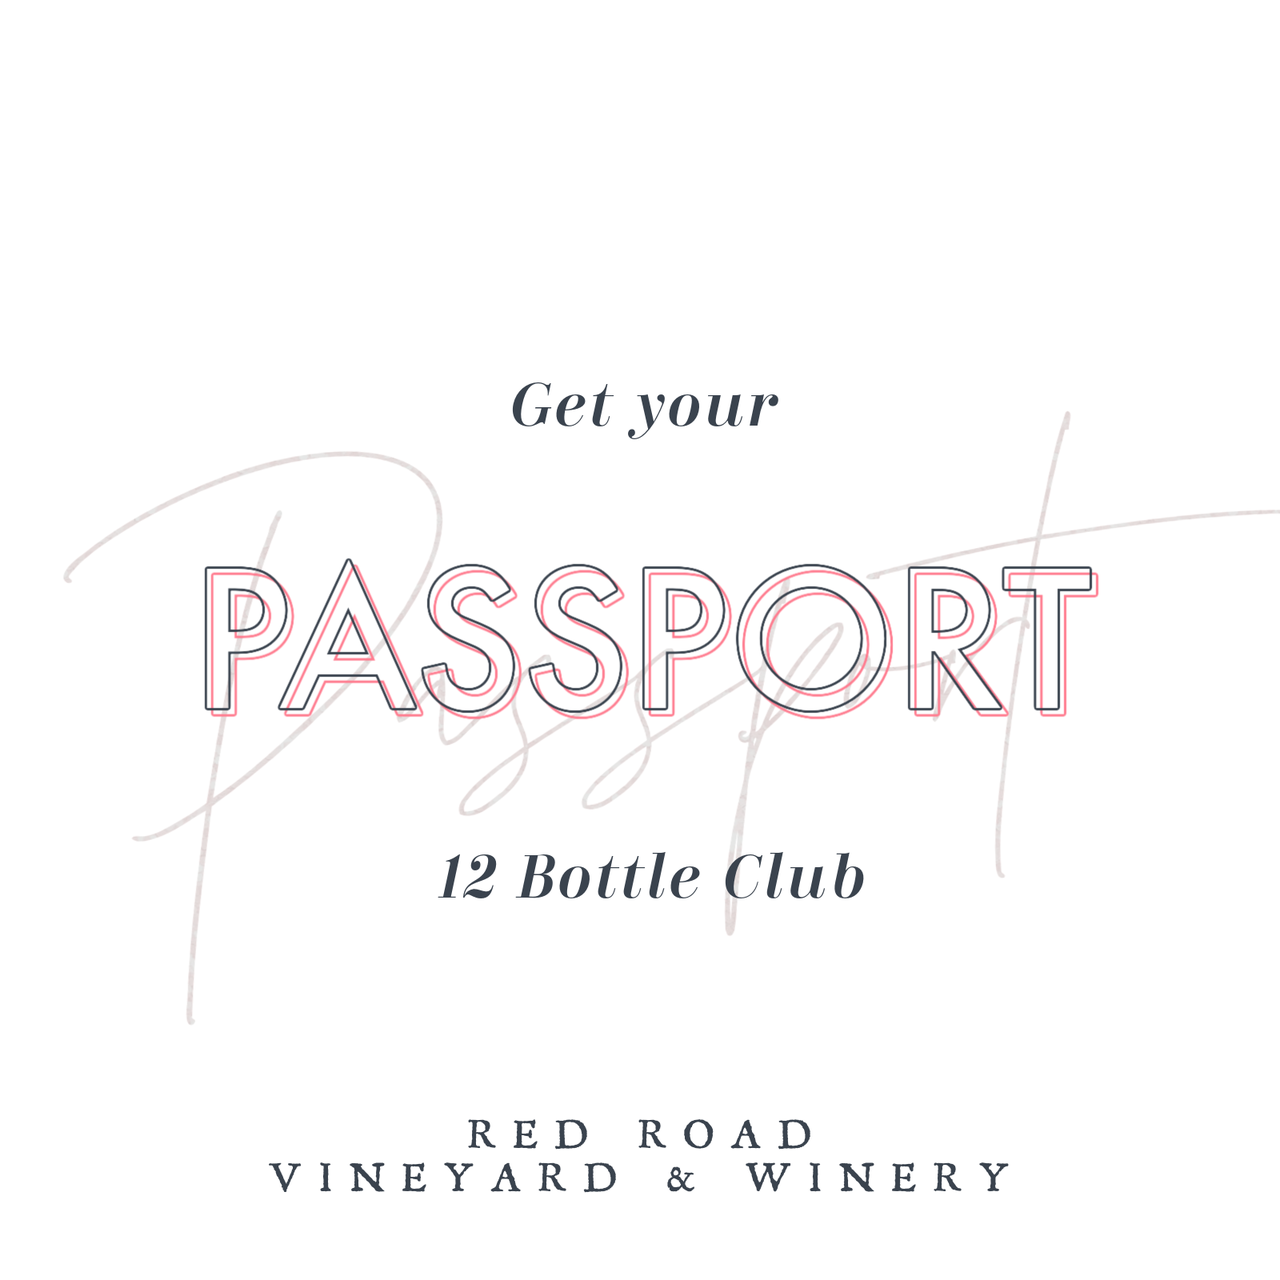 Your Passport Wine Club